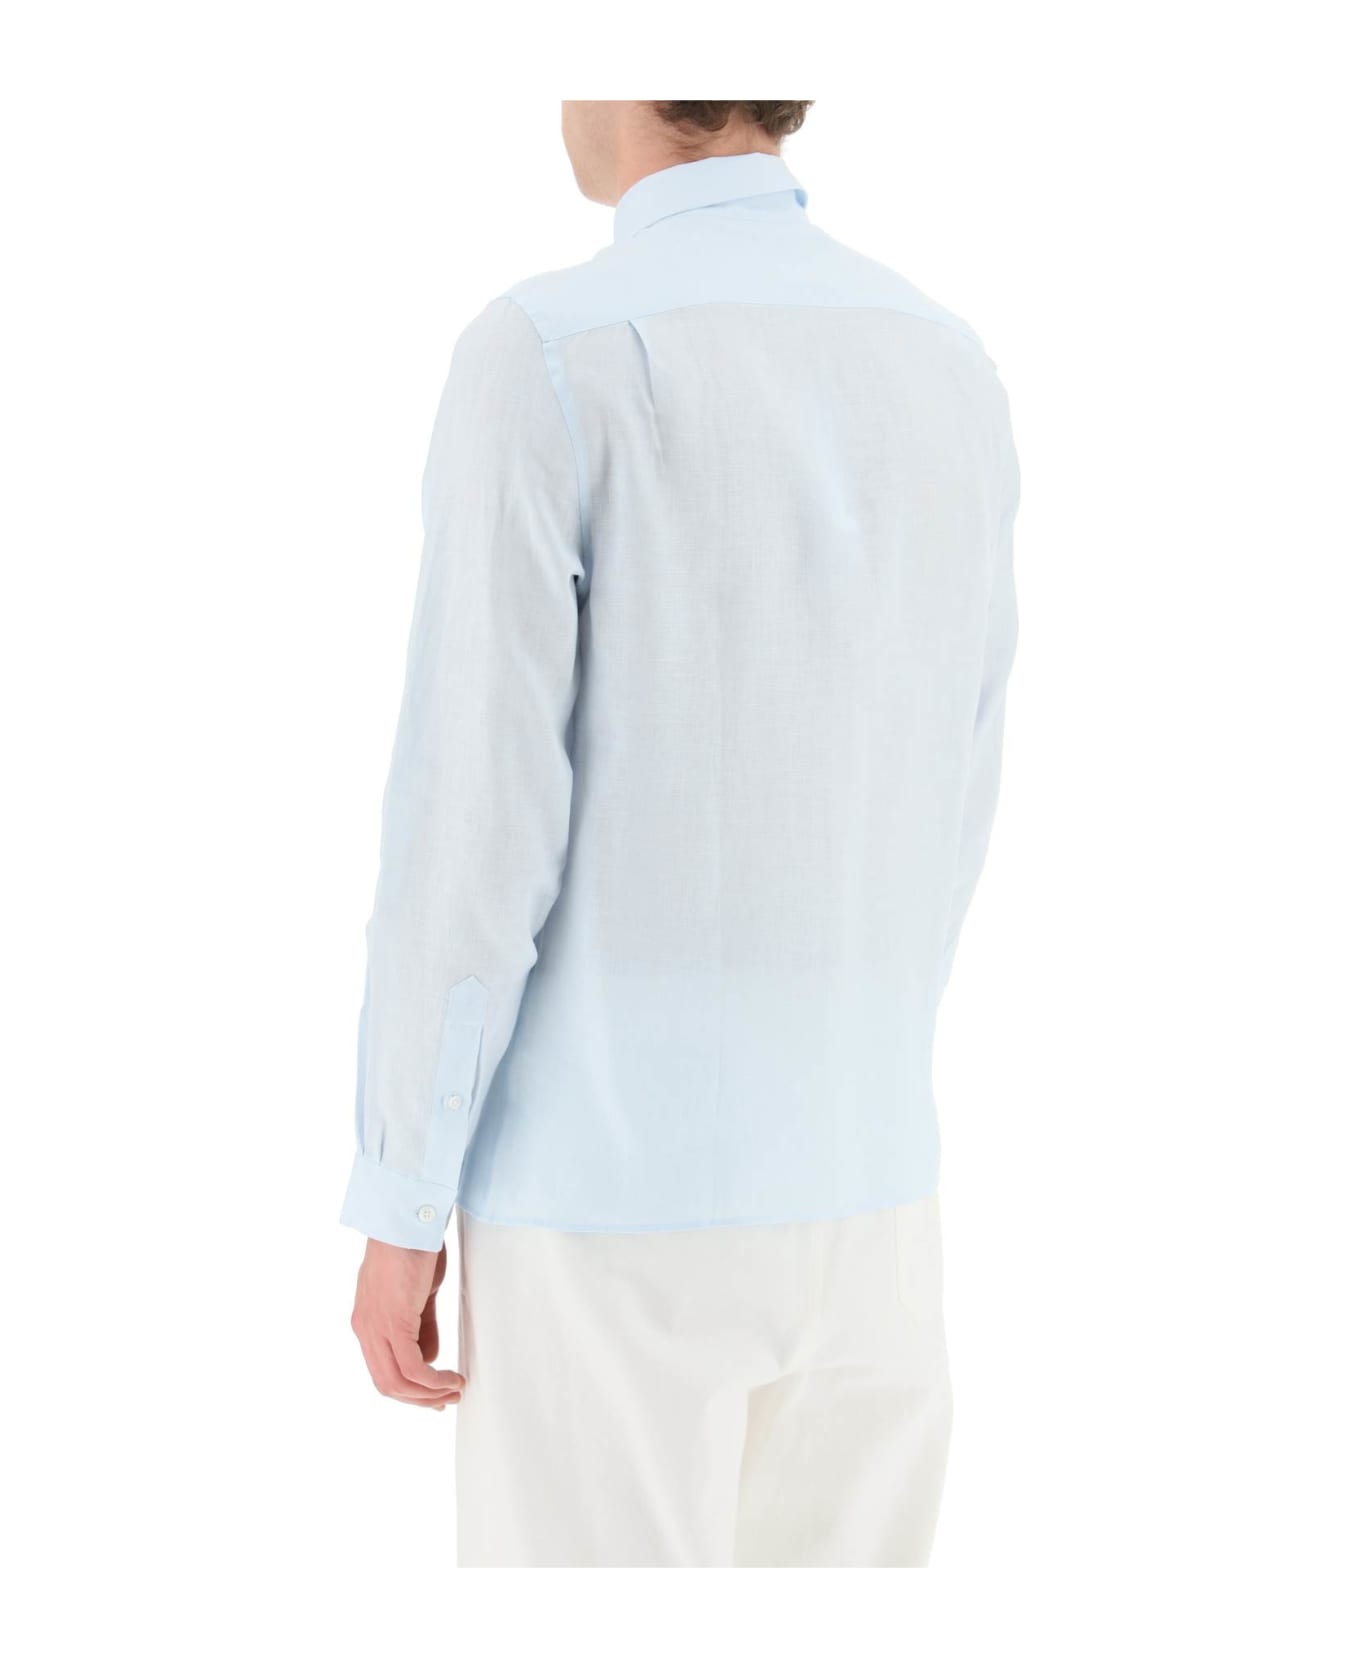 Lacoste Light Linen Shirt - AZZURRO CHIARO (Light blue)